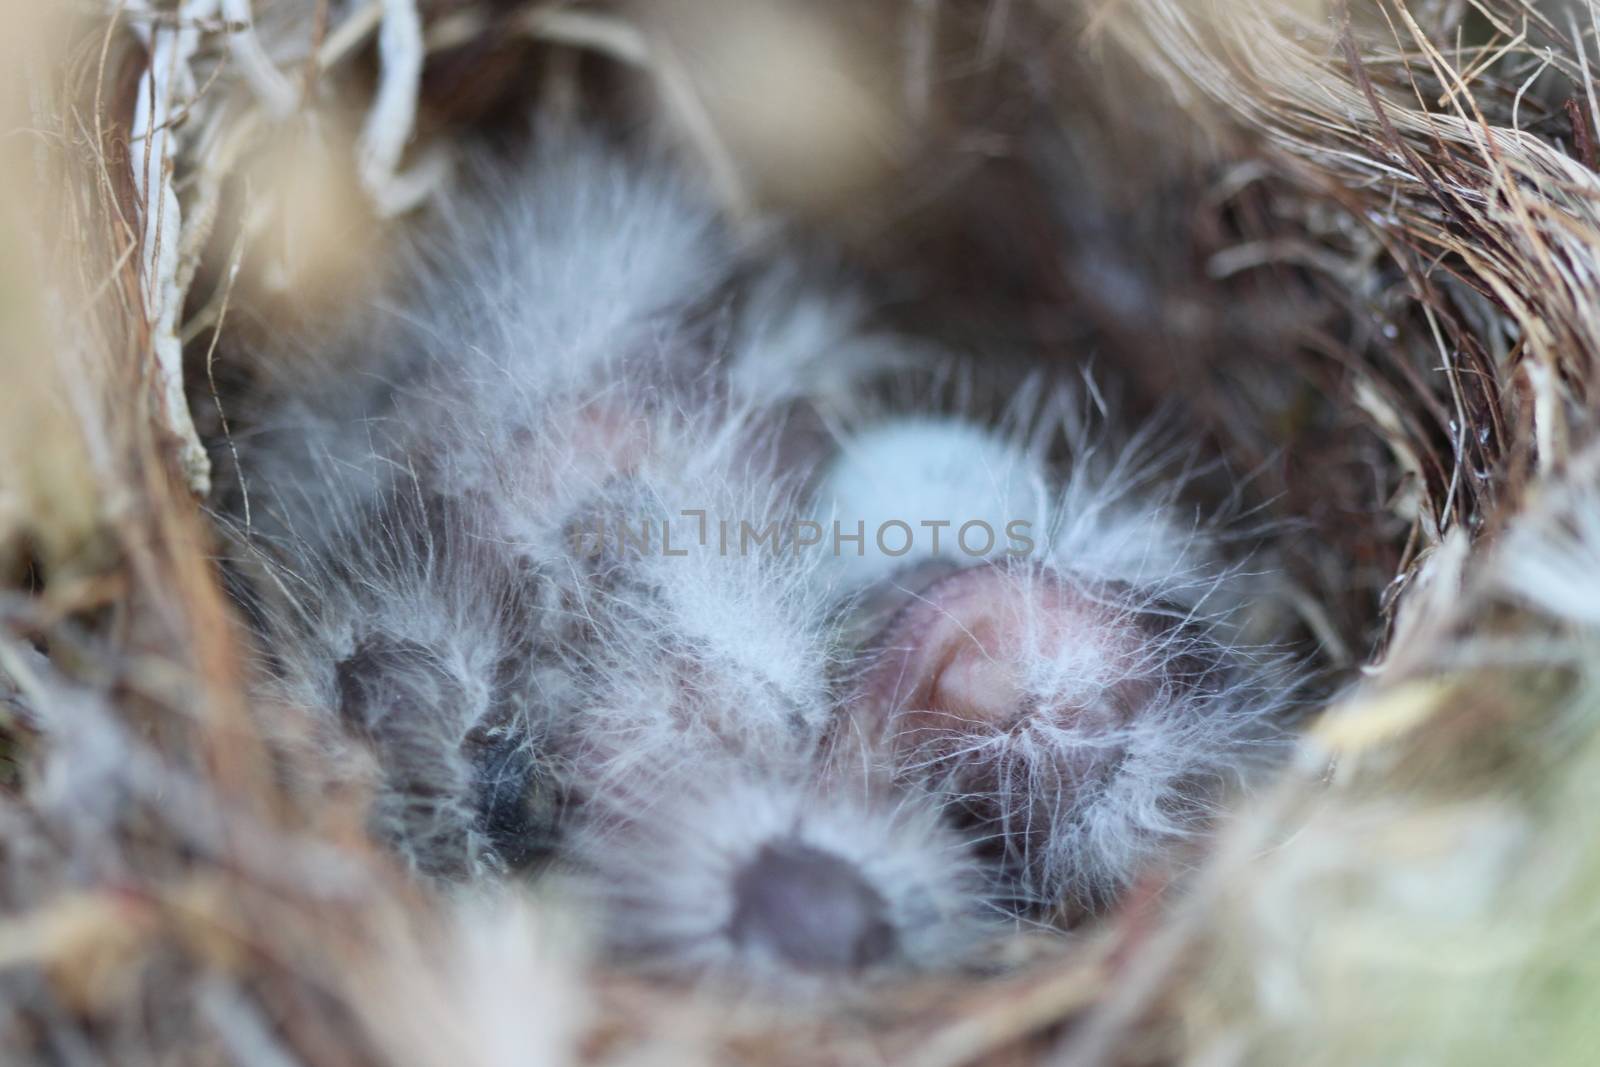 Closeup of sleeping baby birds in their nest.